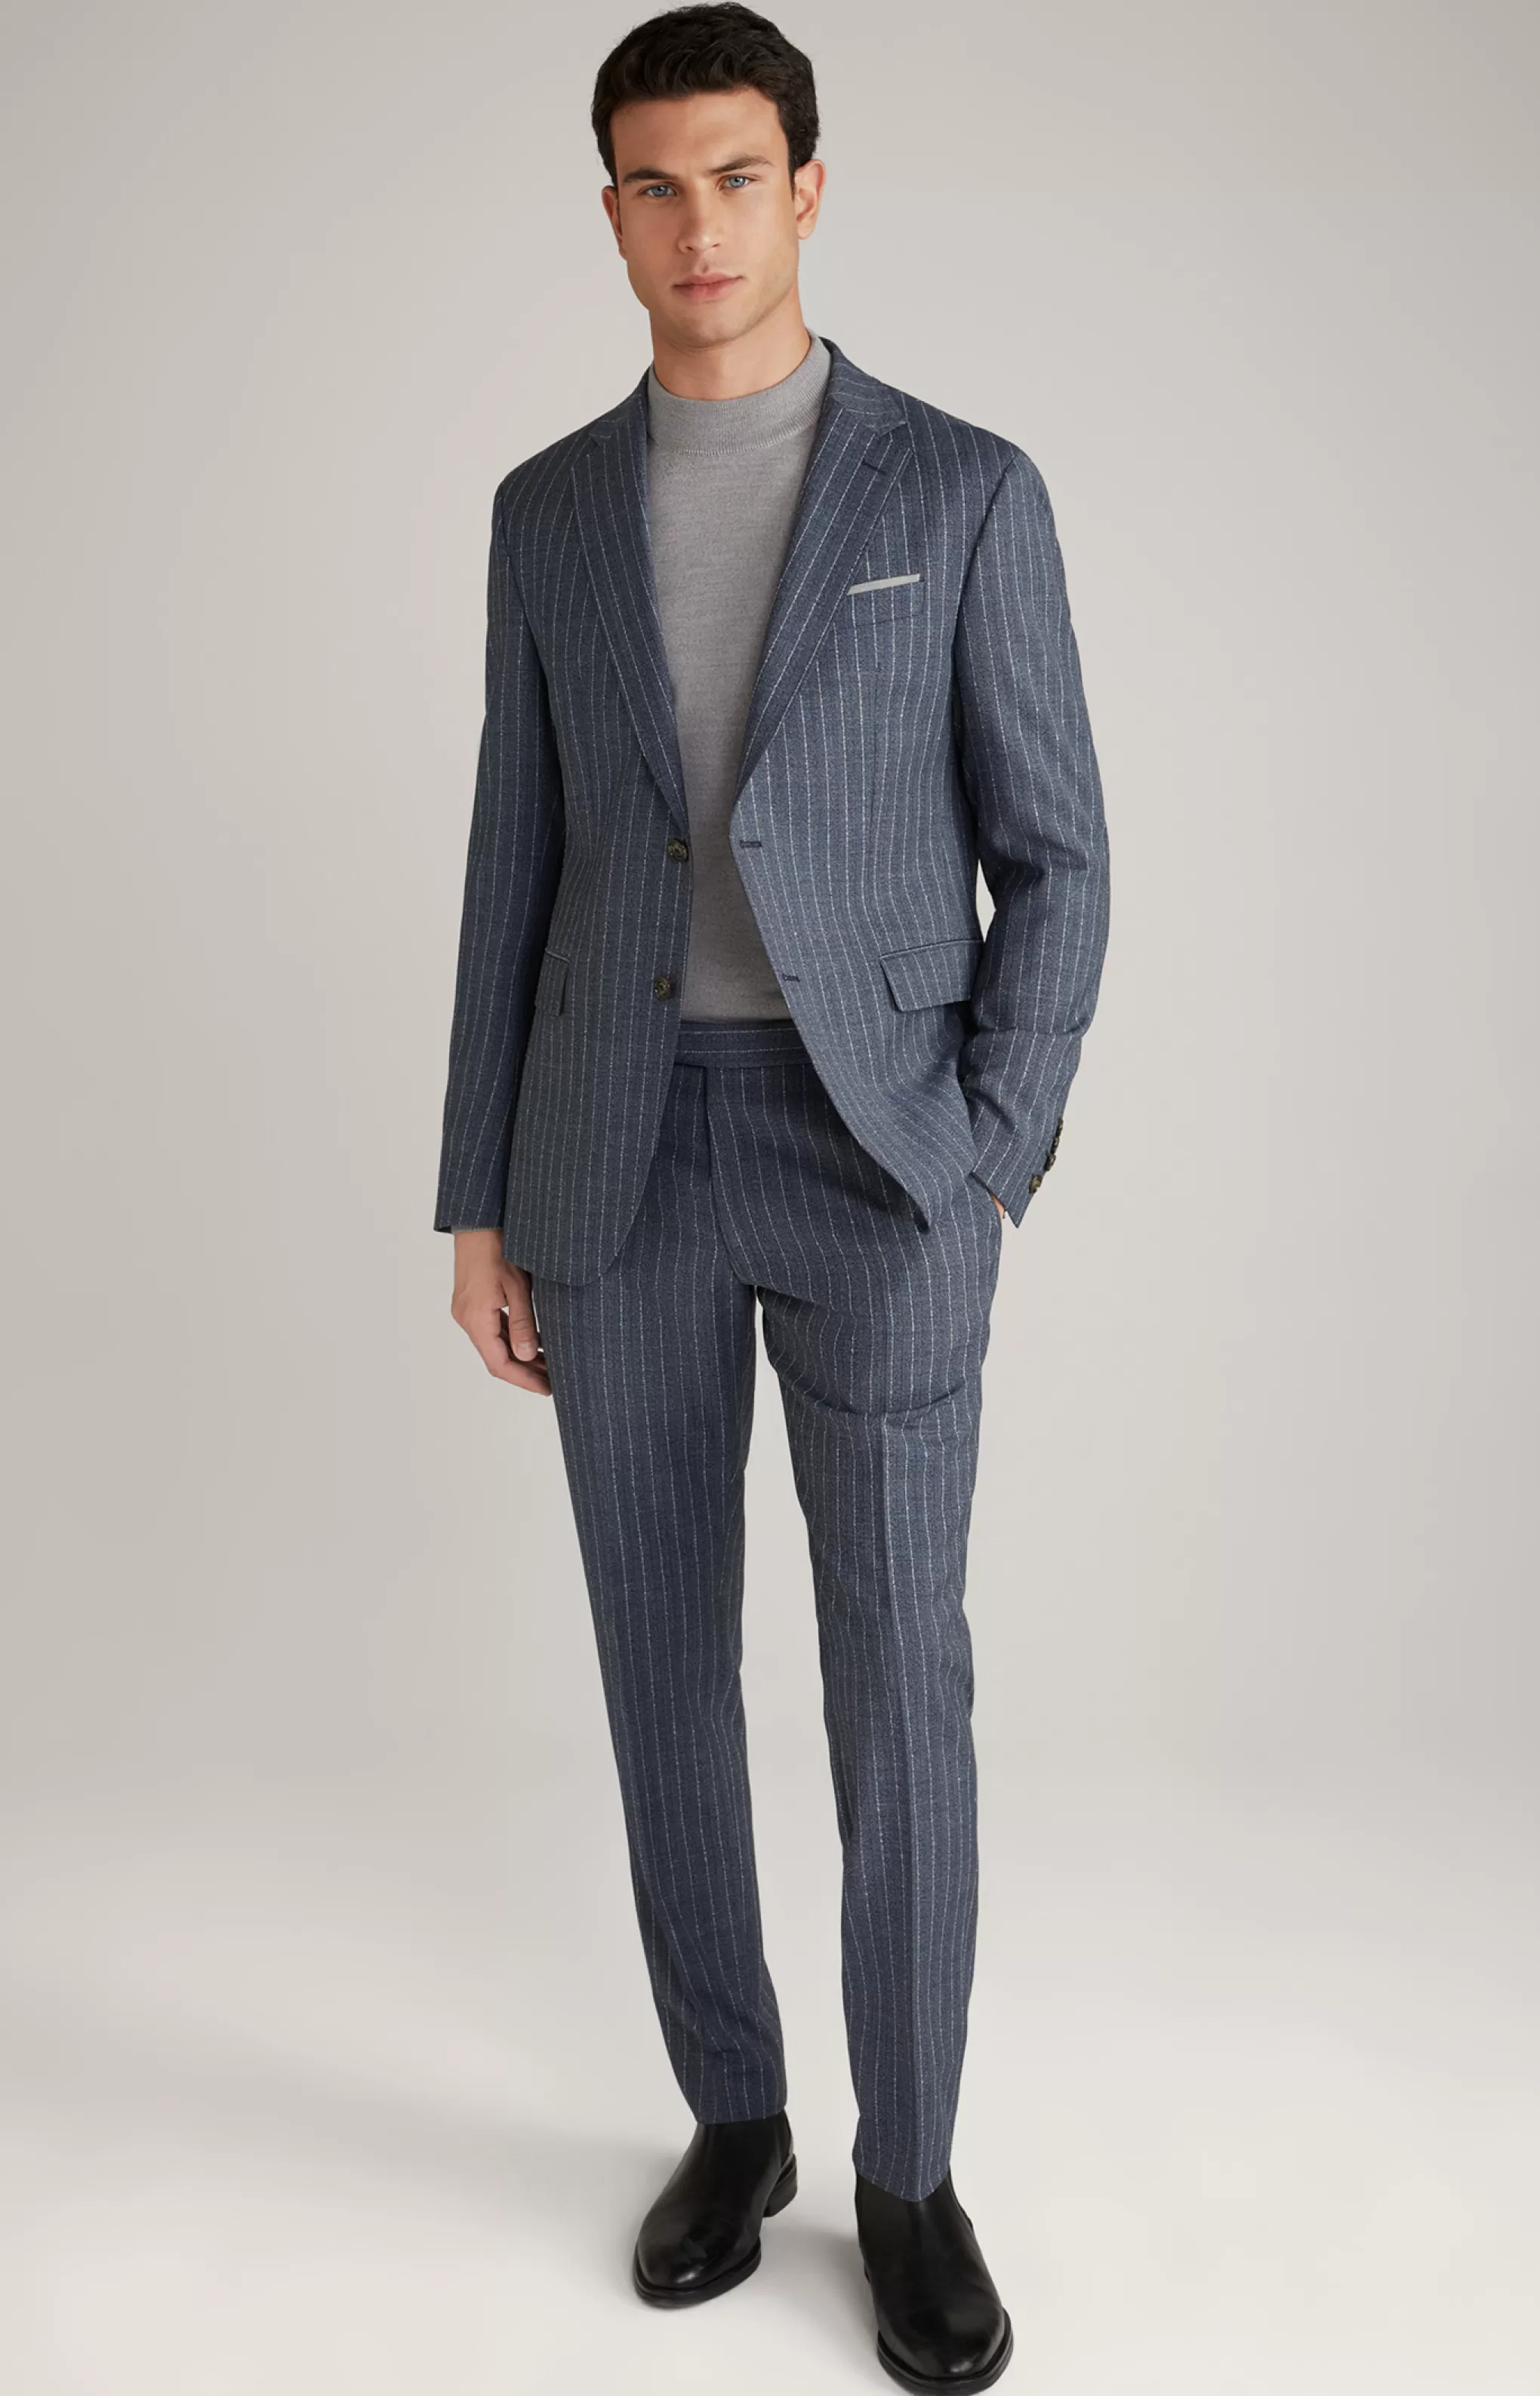 Suits | Clothing*JOOP Suits | Clothing Haspar-Bloom Suit in Blue Stripes